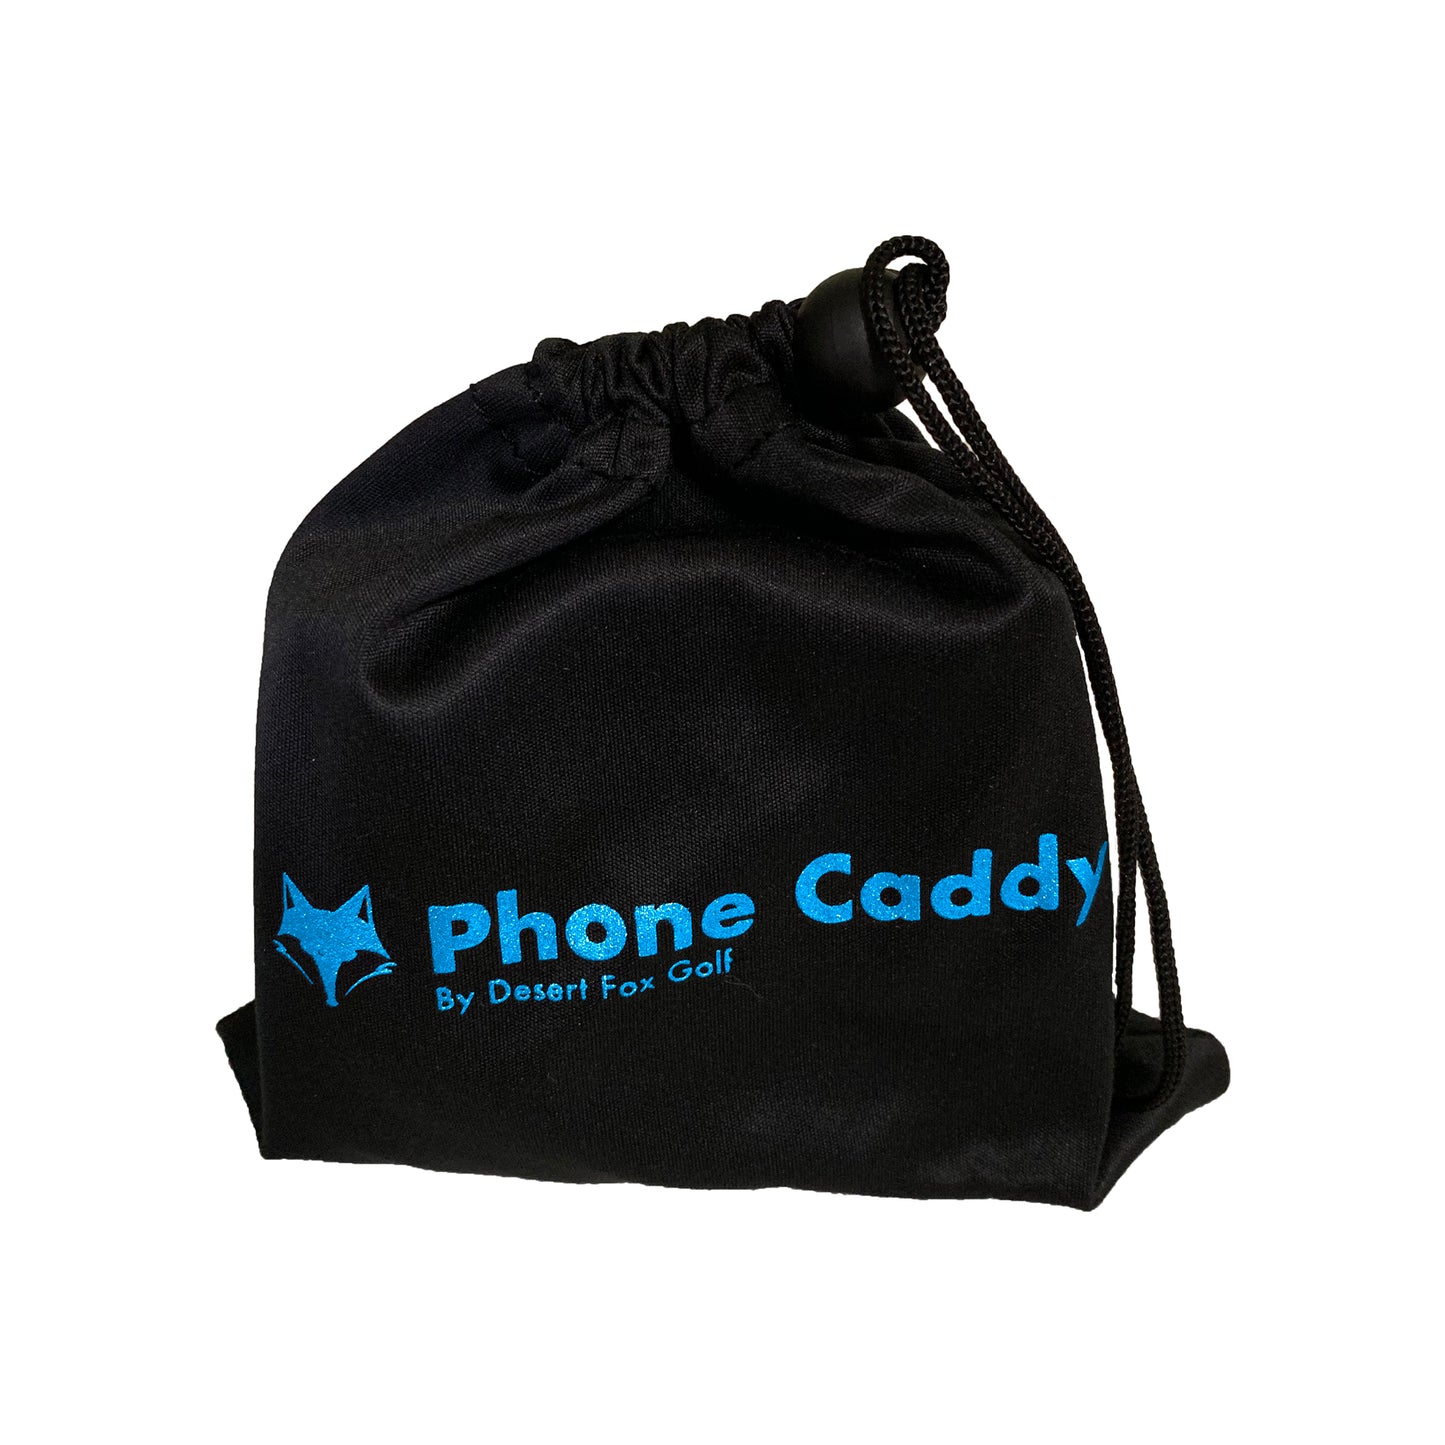 Phone Caddy - Build Golf Back Better